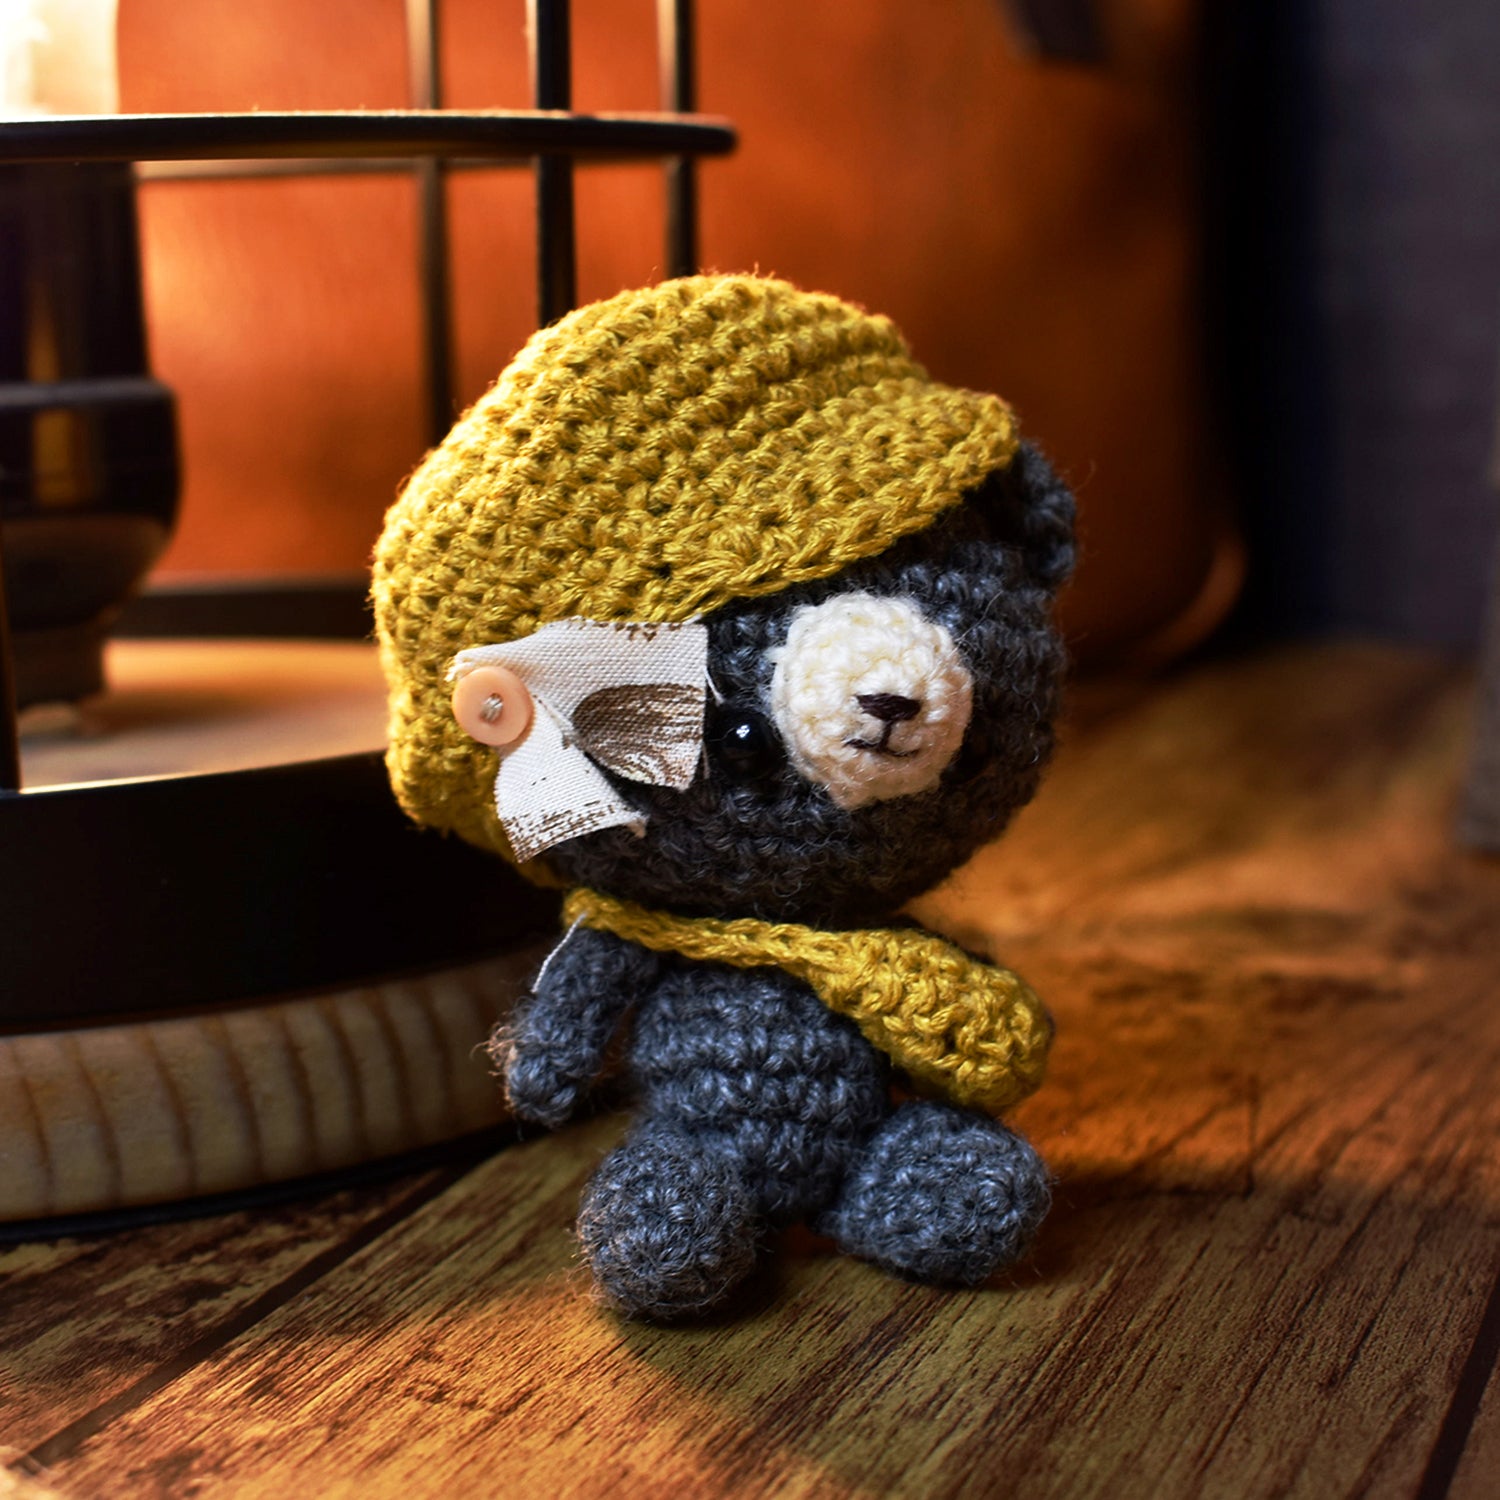 amibox Japan handmade cute knitted grey gray teddy bear with hat and shoulder bag RARE FIND ZAKKA